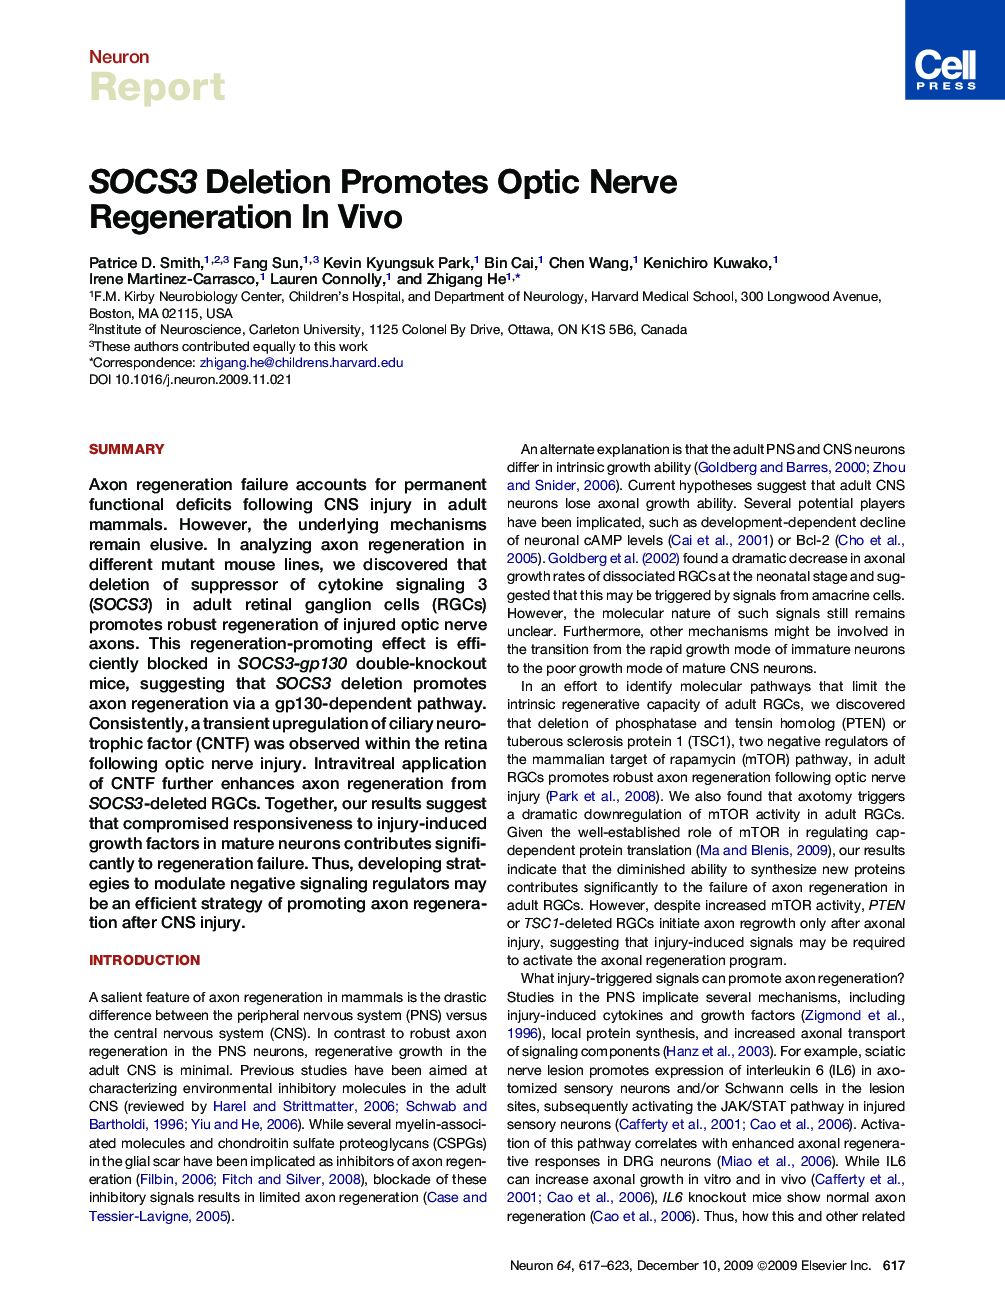 SOCS3 Deletion Promotes Optic Nerve Regeneration In Vivo